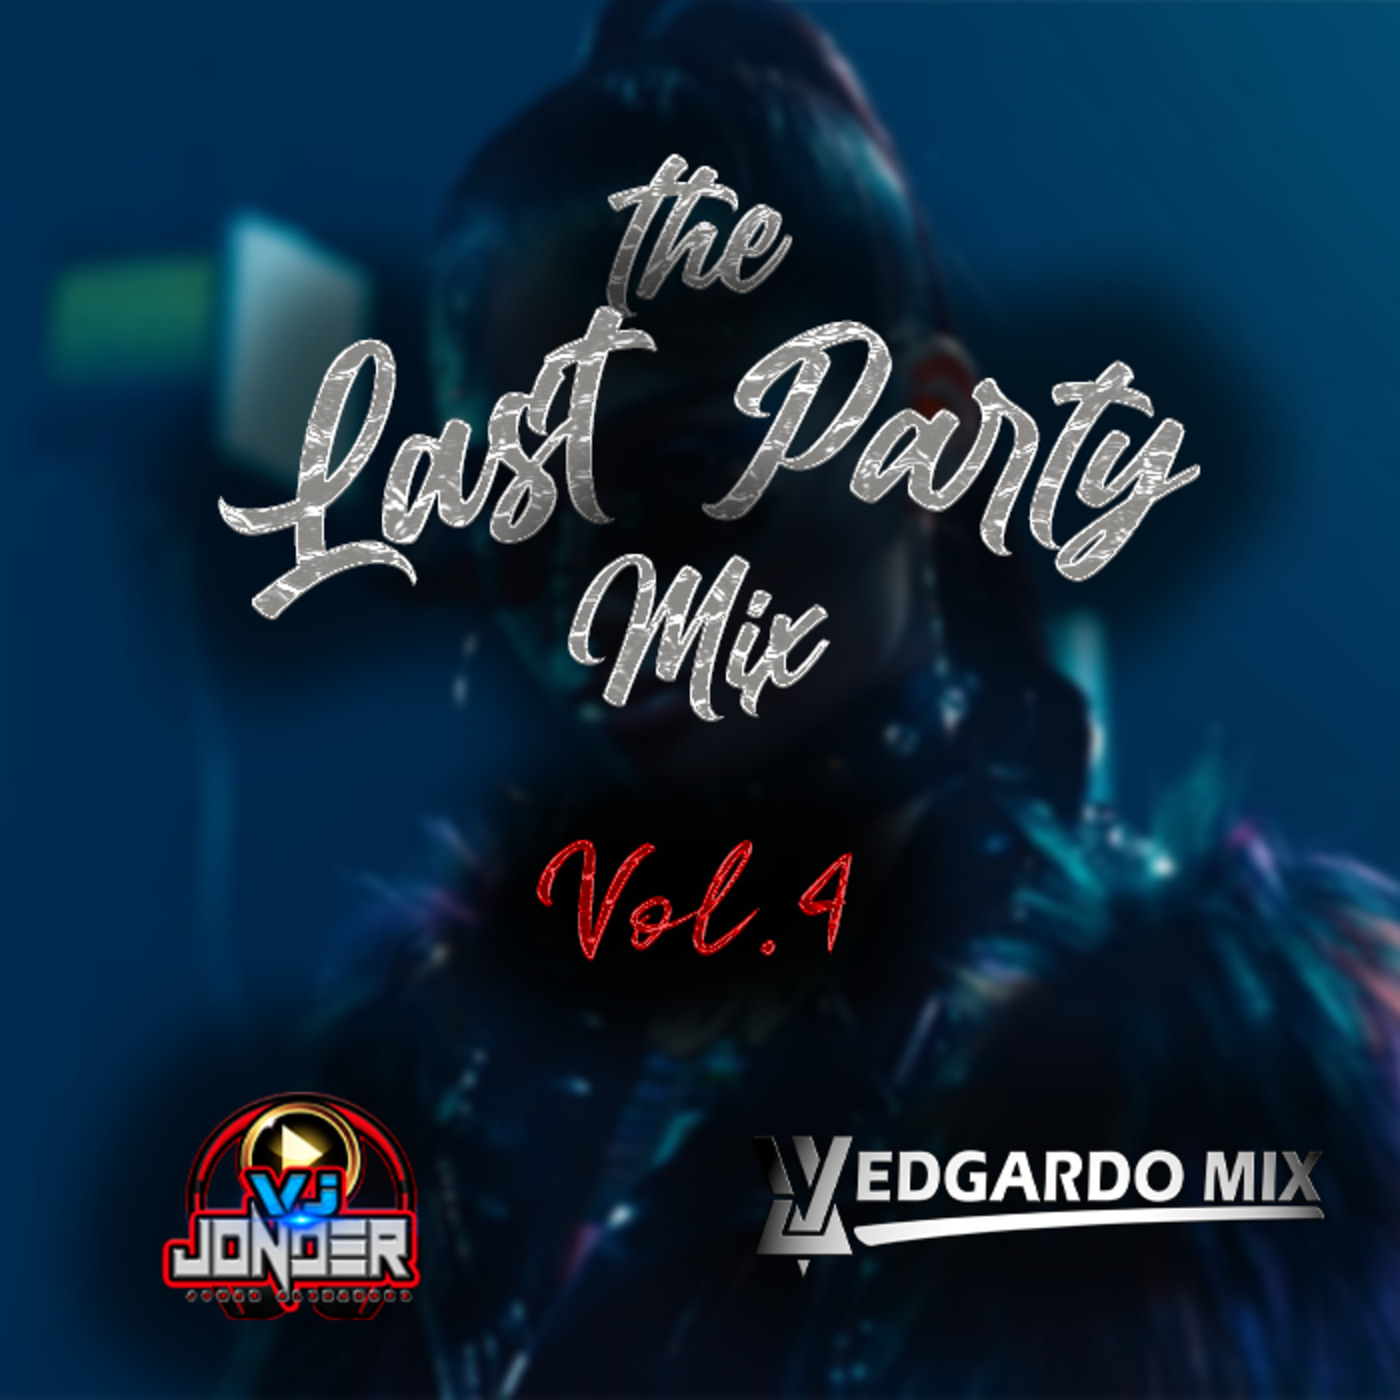 Vj Jonder Ft. Vj Edgardo Mix - The Last Party Mix Vol.4